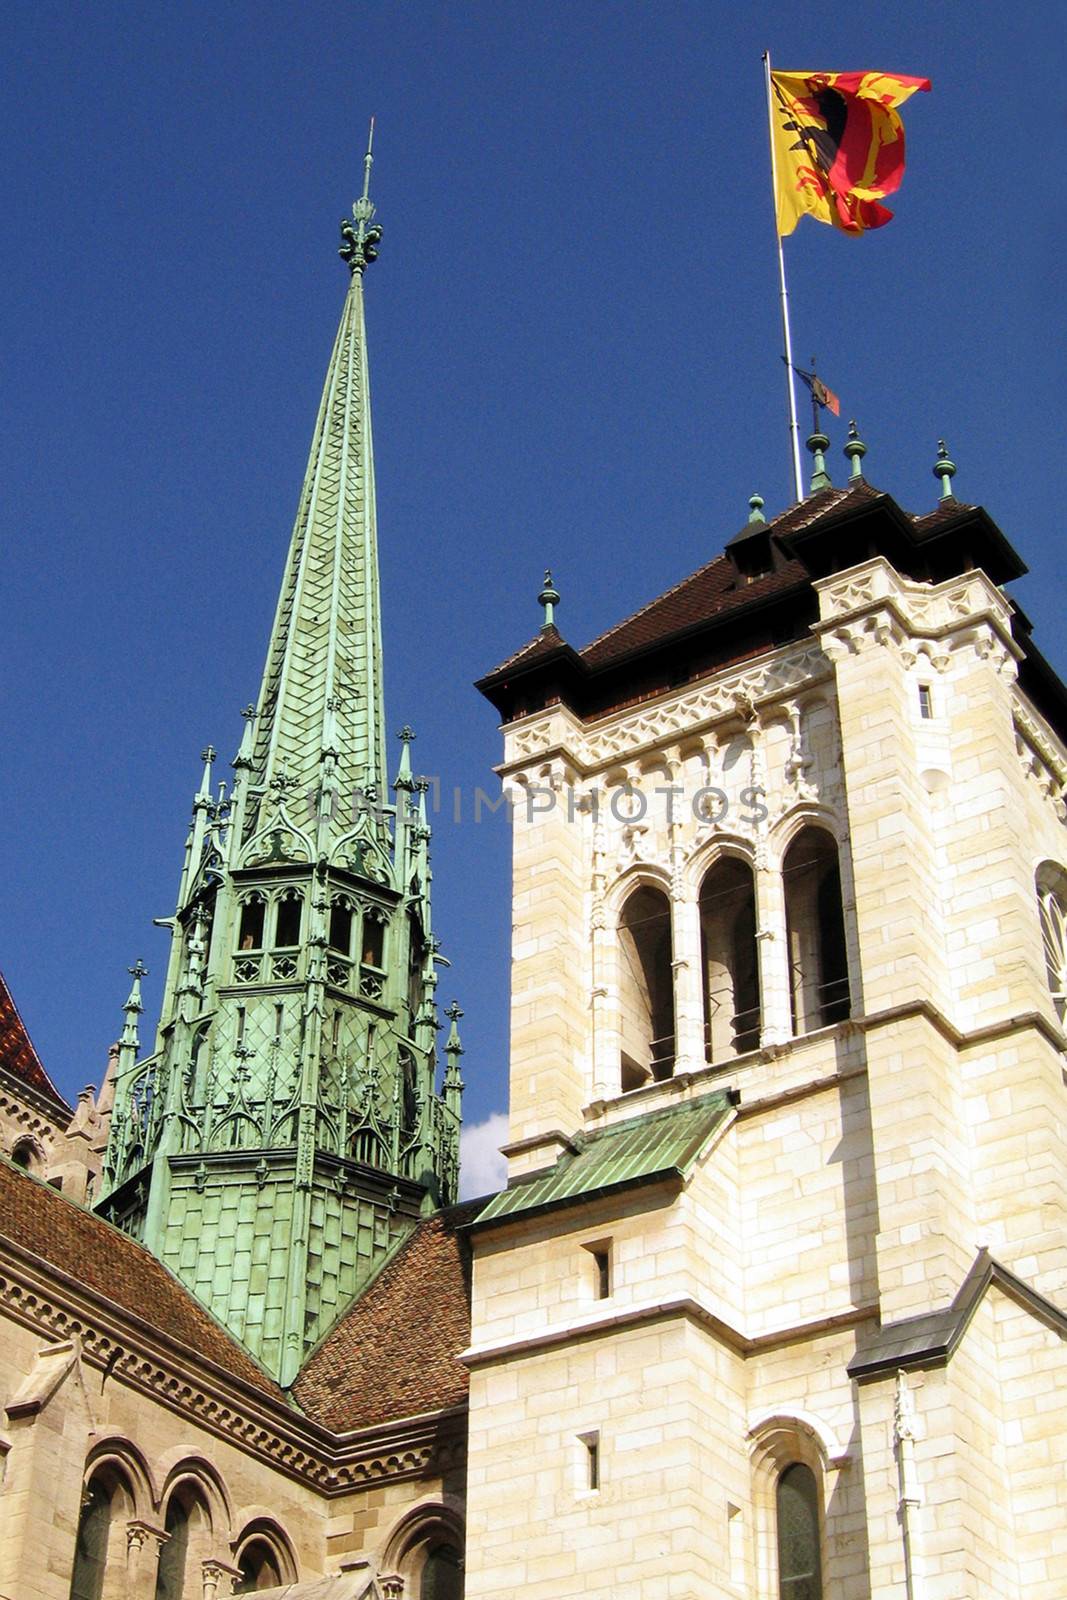 The St. Pierre Cathedral in Geneva, Switzerland.